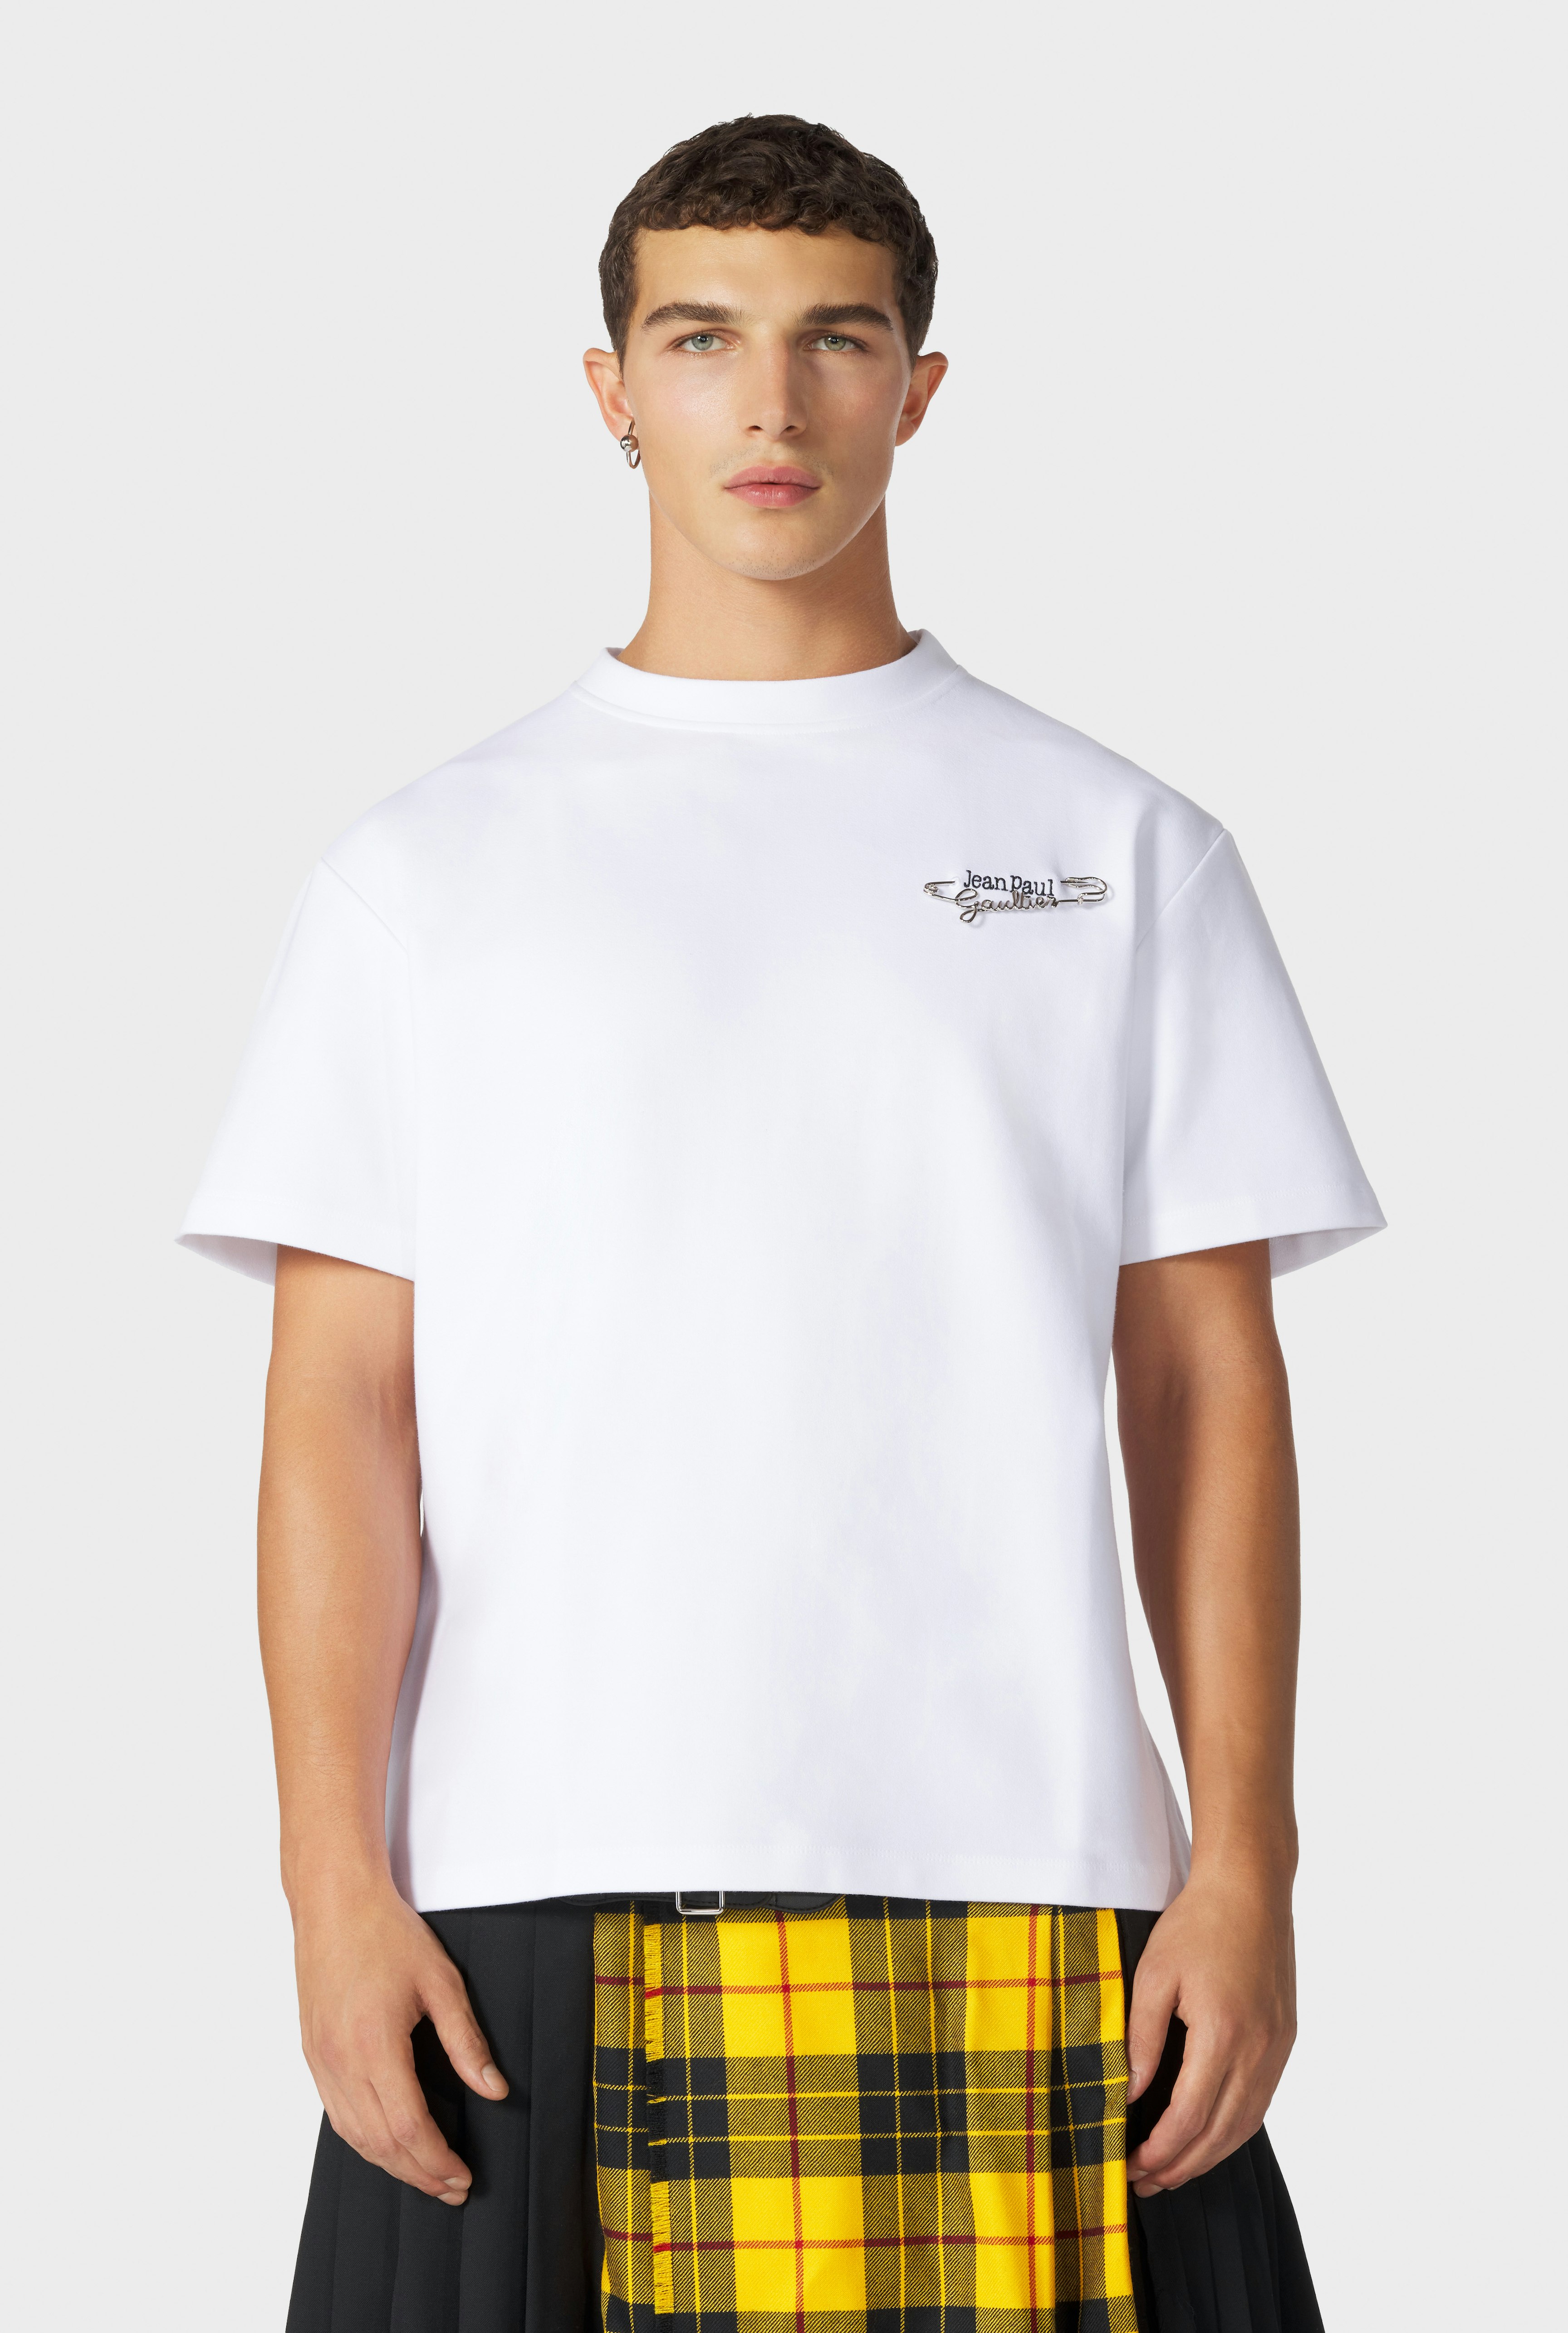 The Brooch T-shirt Jean Paul Gaultier